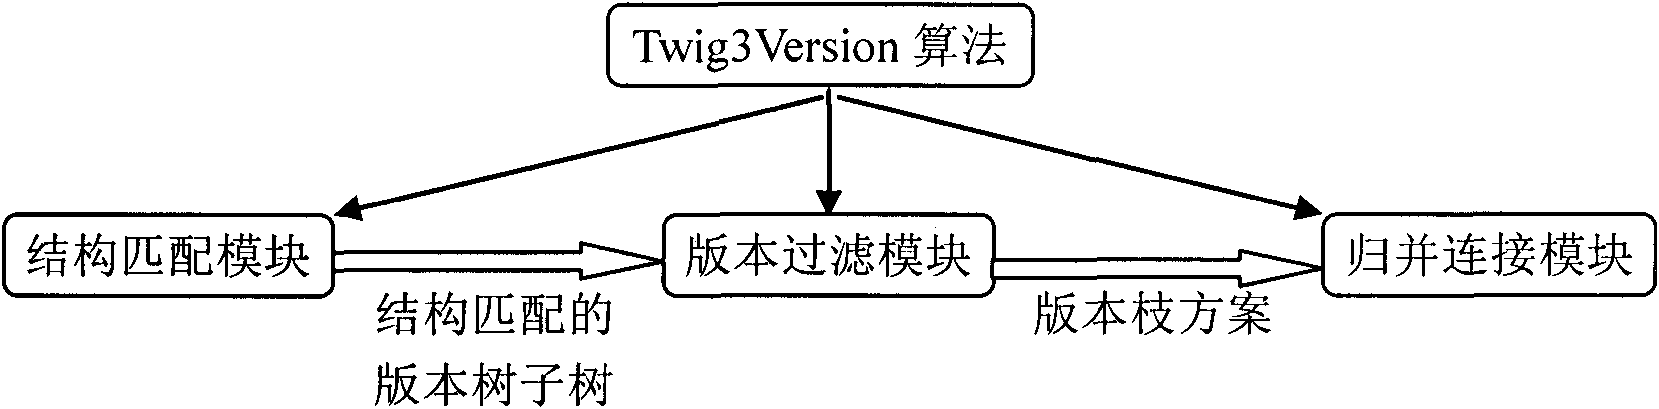 Three-stage XML (X Extensible Markup Language) twig matching algorithm based on version trees